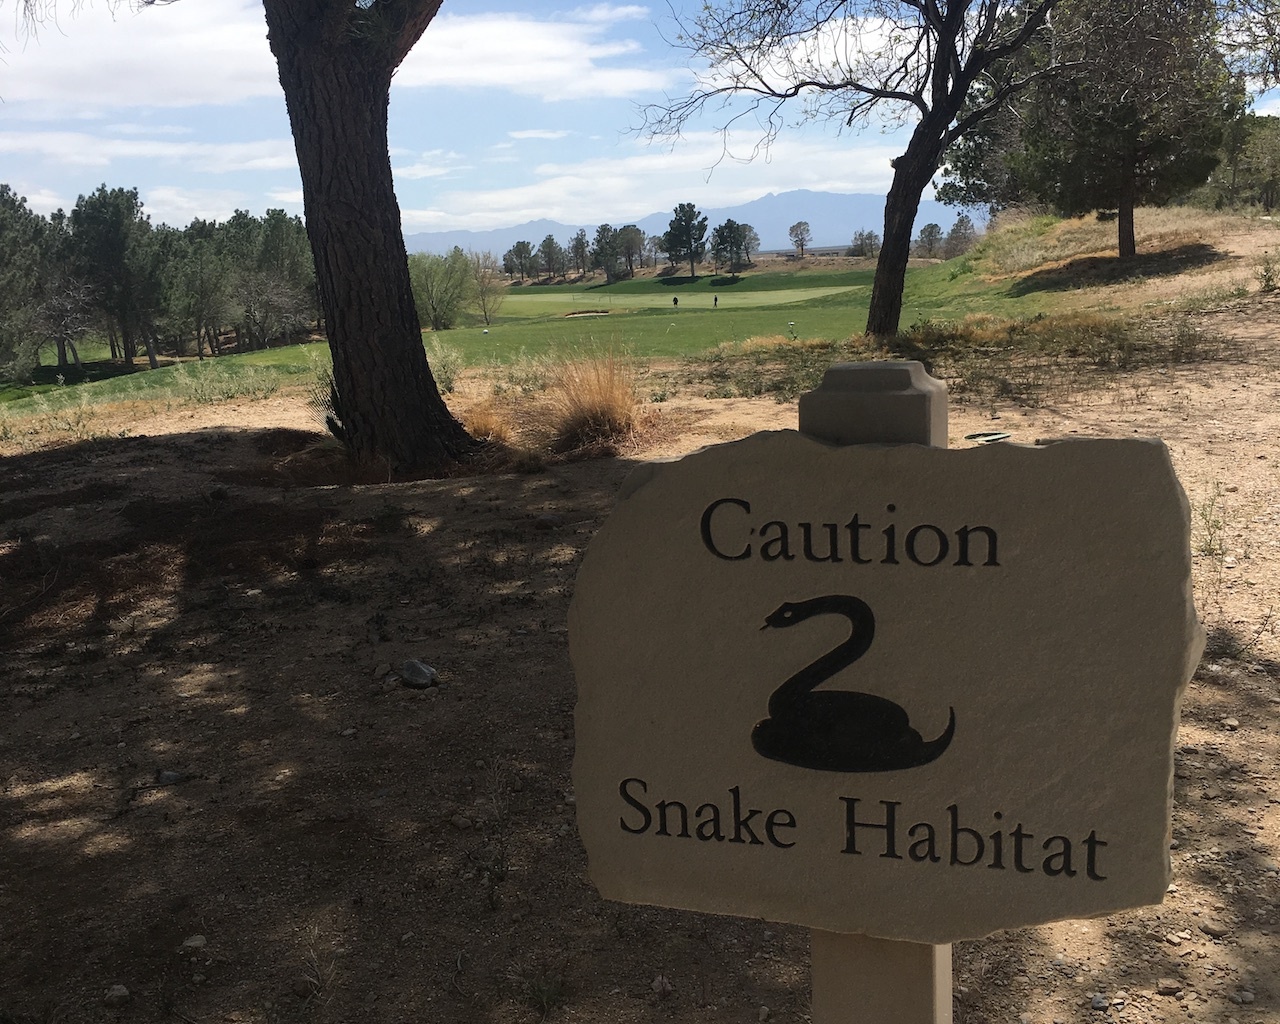 snake habitat sign on golf course